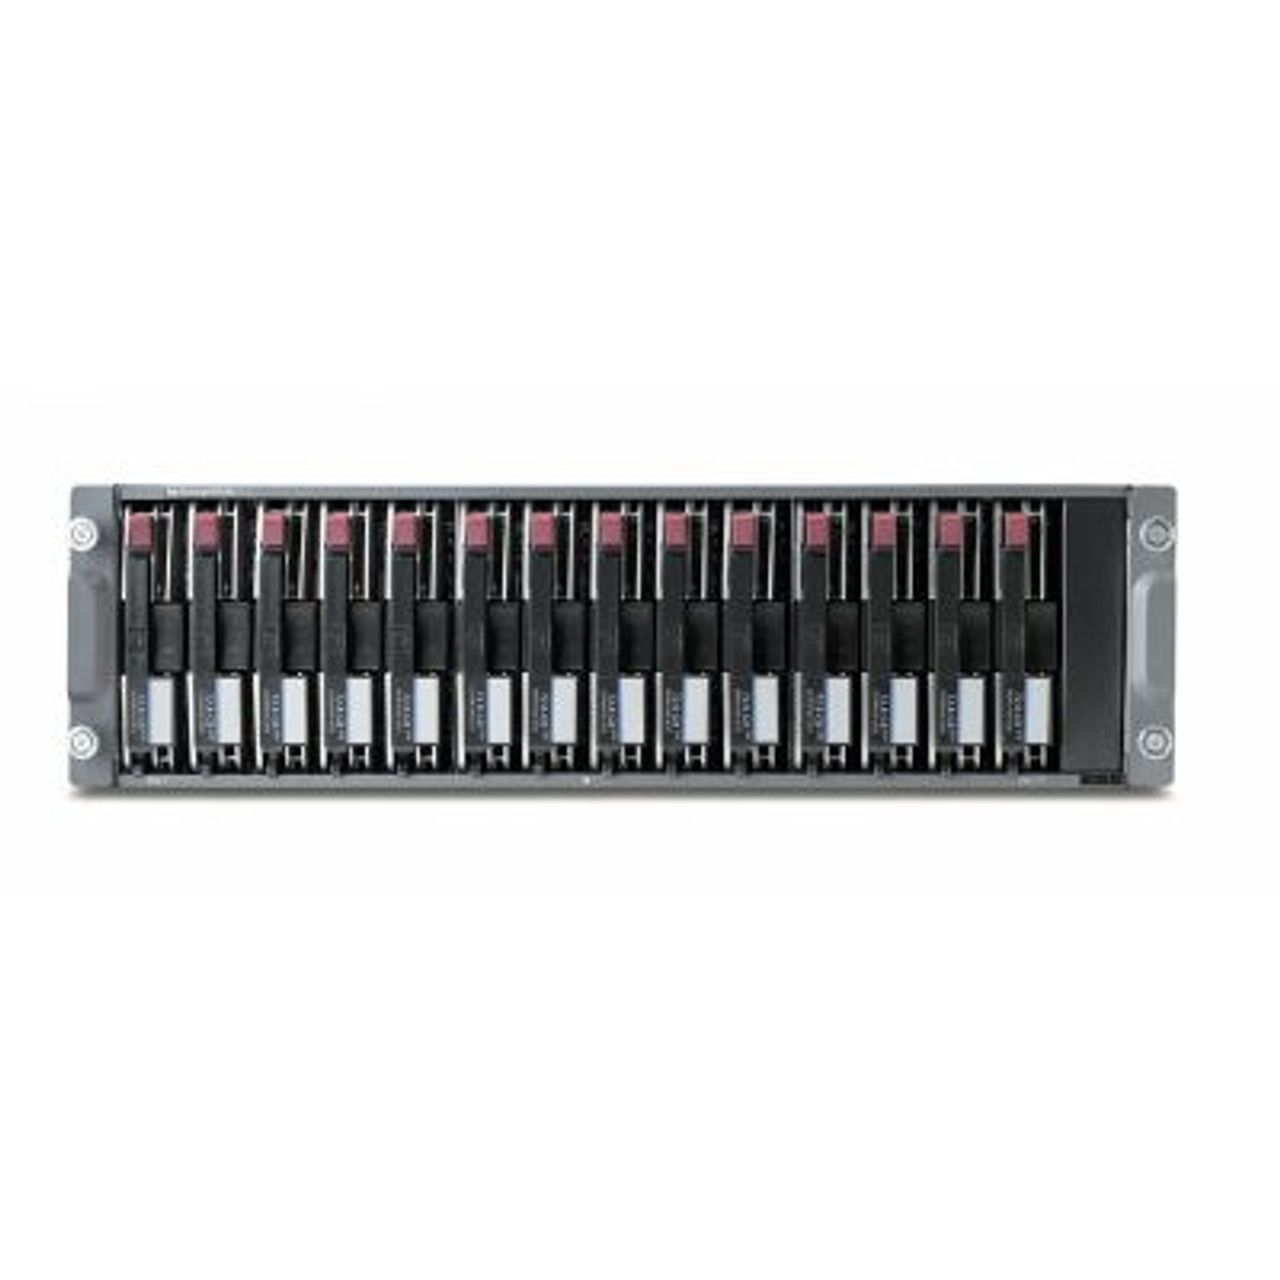 302969-B21 - HP StorageWorks Modular Smart Array 30 Single Bus 4414 Ultra320 Storage Enclosure Rack-Mountable